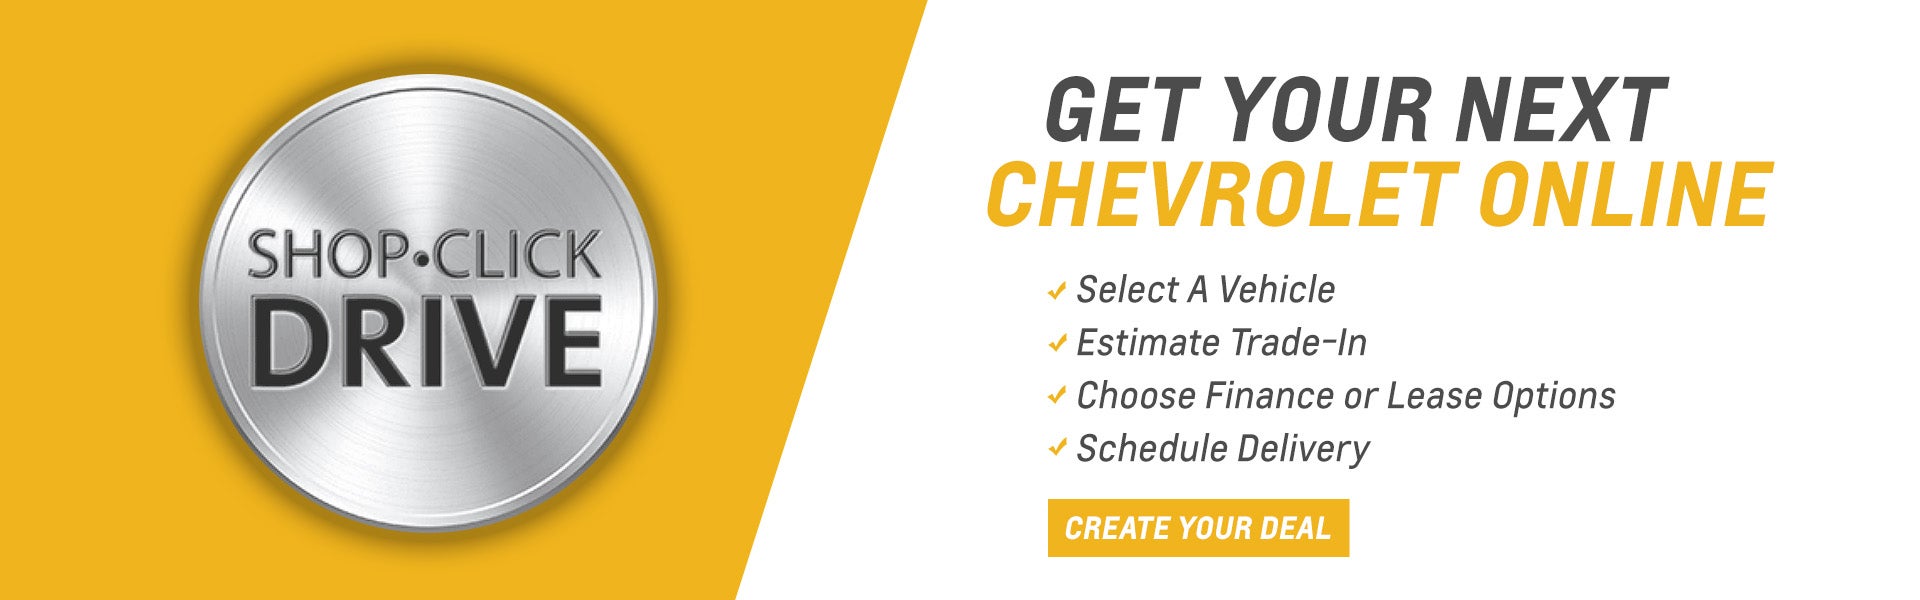 Get You Next Chevrolet online